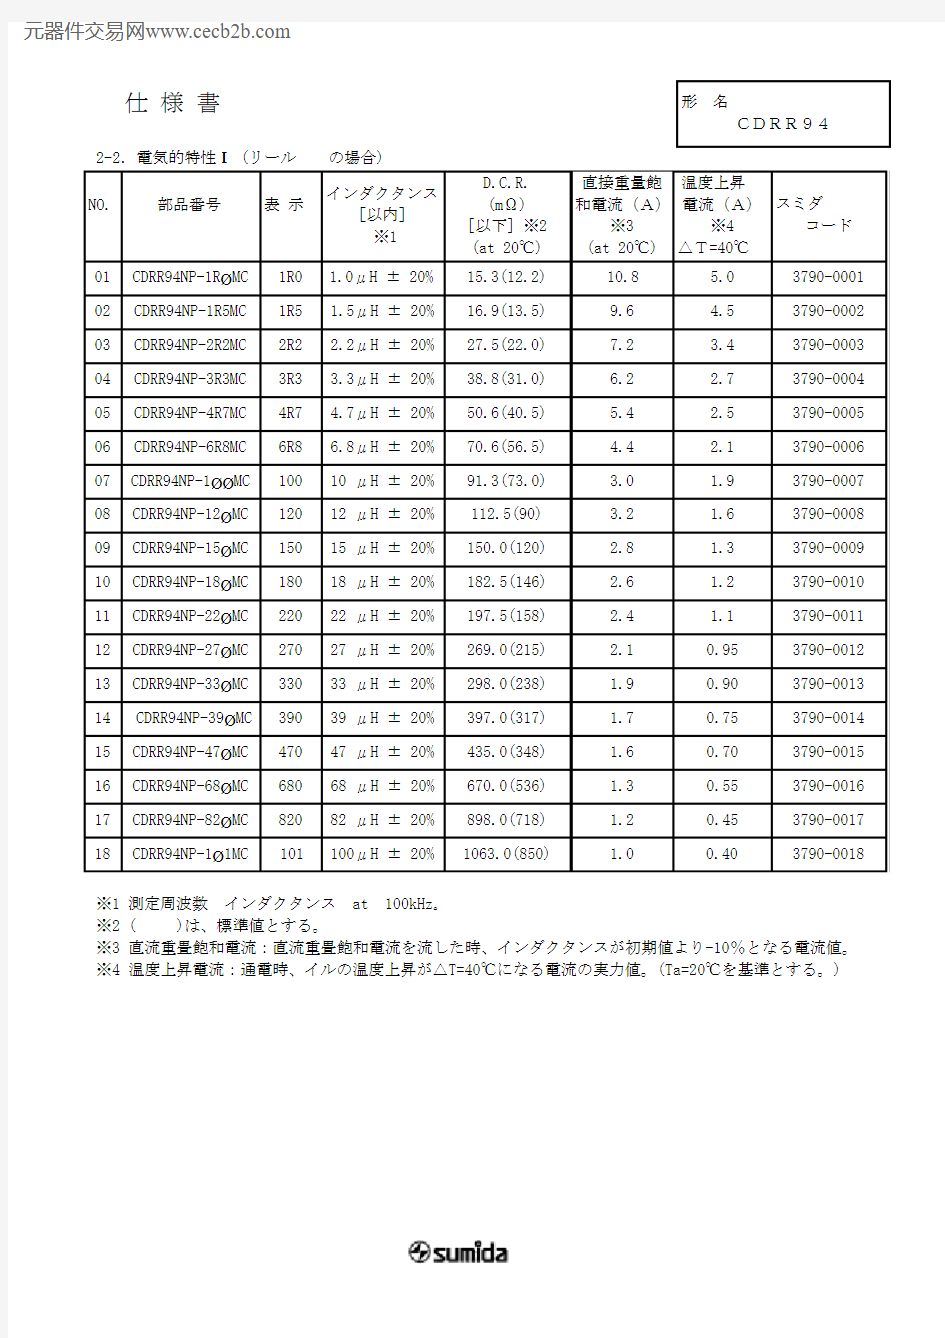 CDRR94NP-100MB中文资料